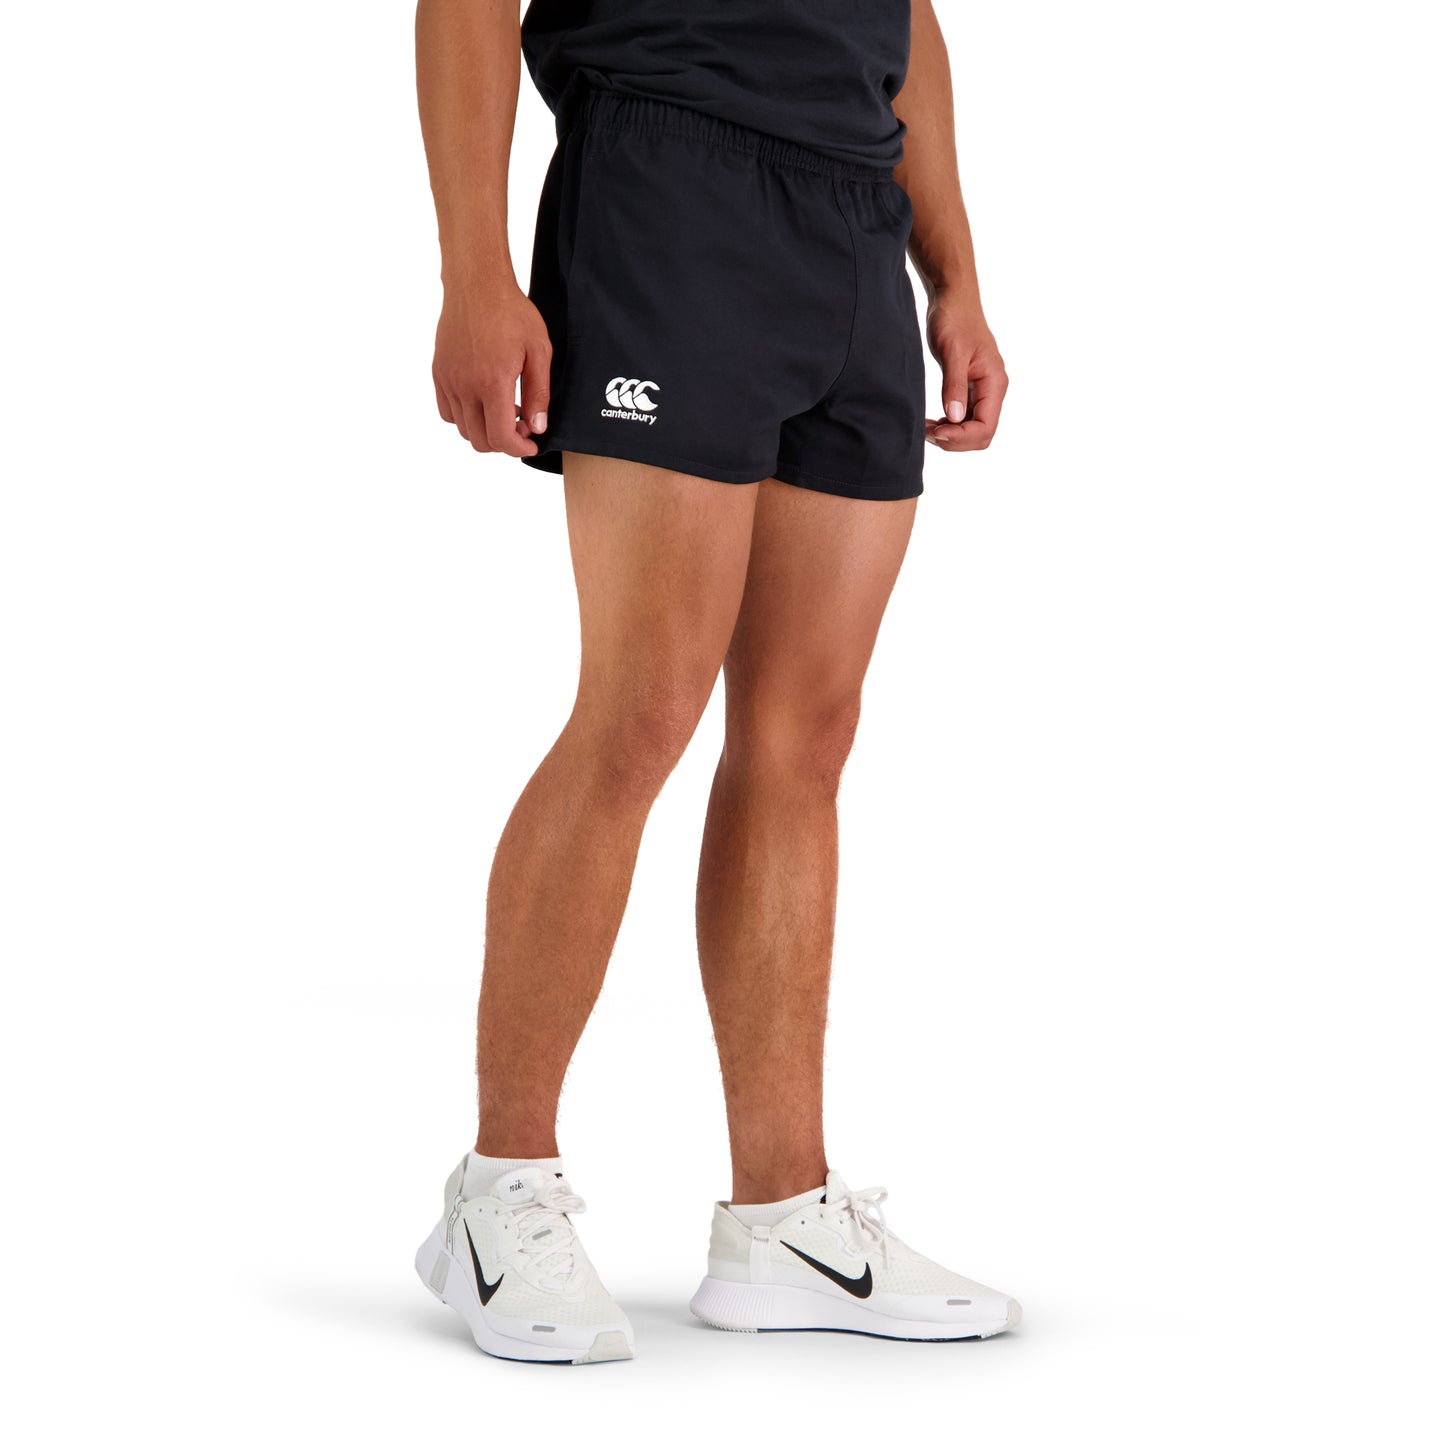 Black Canterbury shorts worn by a man